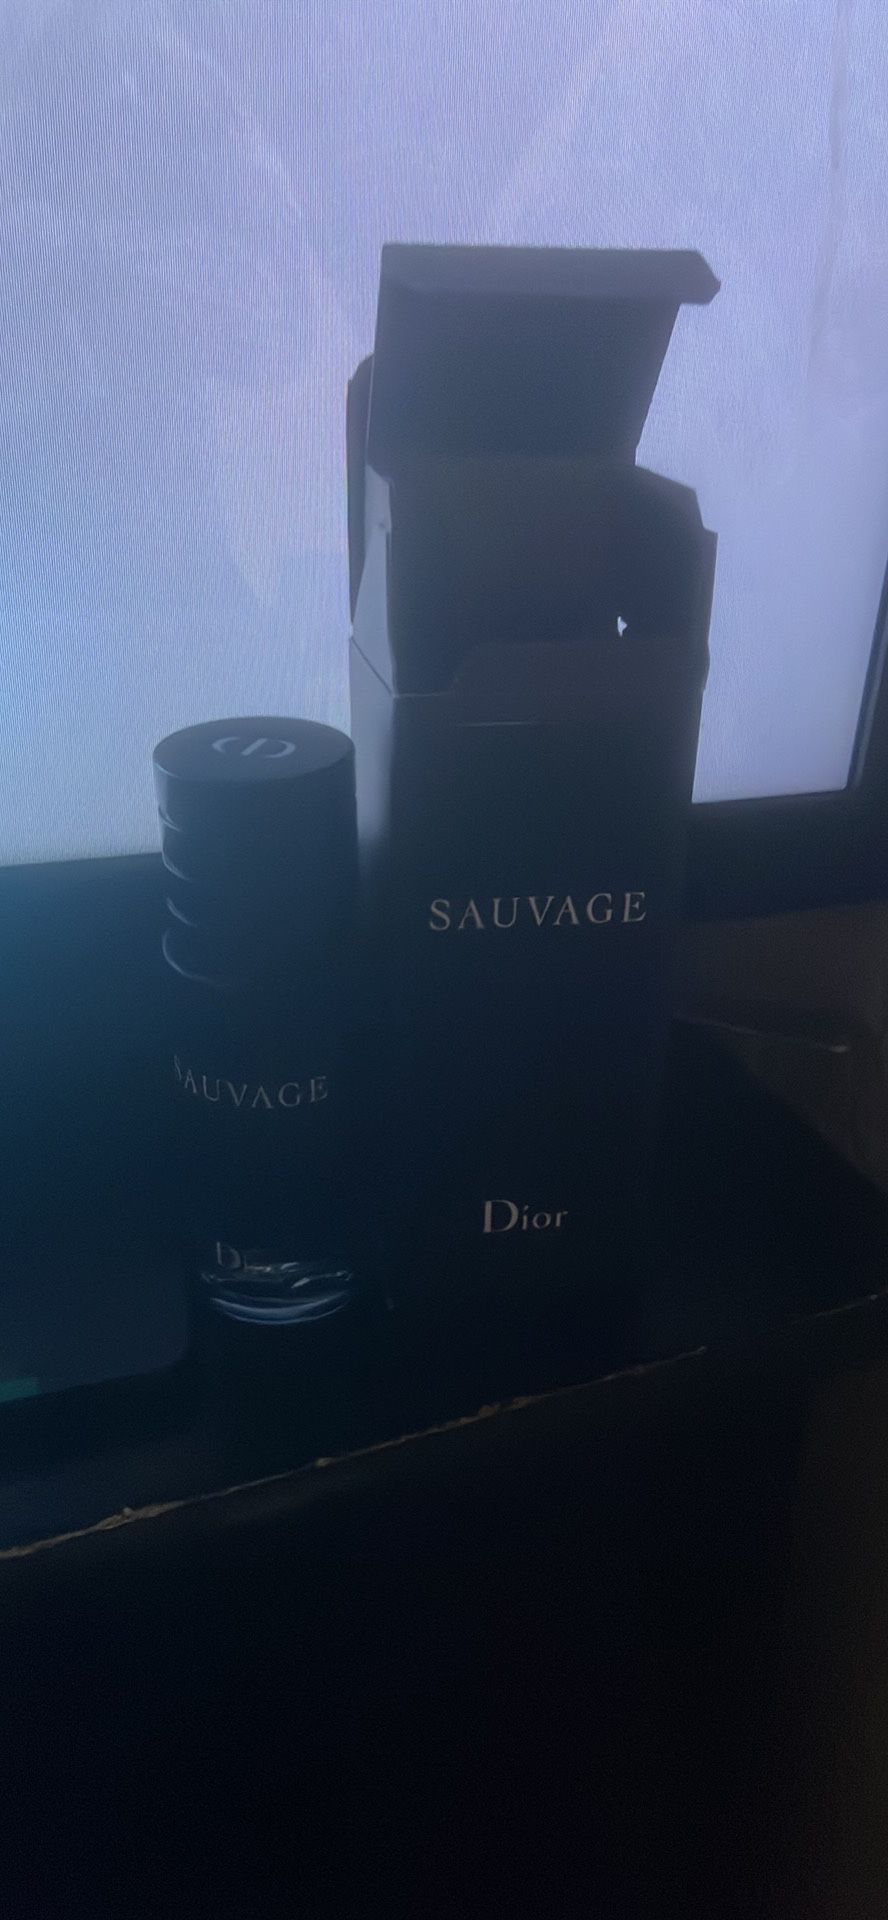  dior sauvage 1oz fragrance